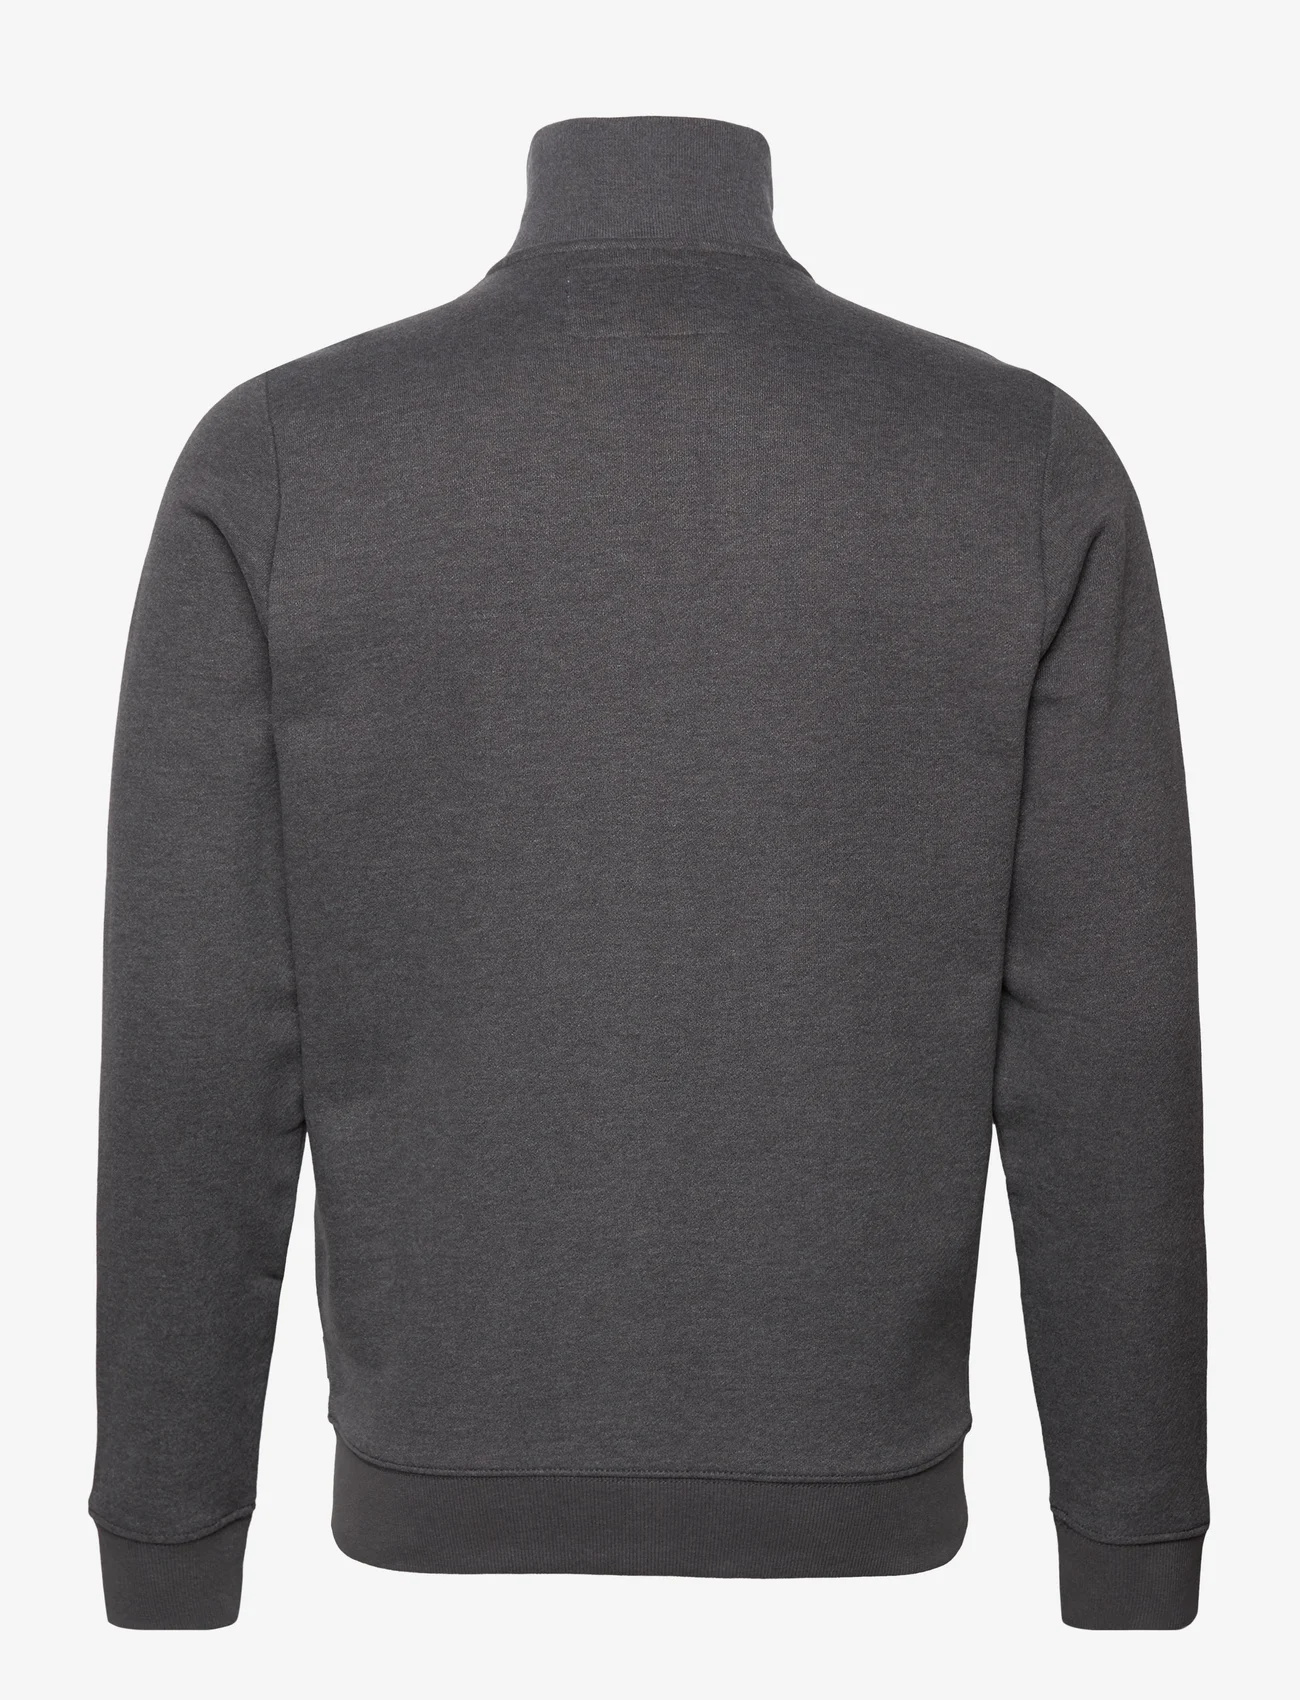 Tom Tailor - cutline sweat jacket - geburtstagsgeschenke - dark grey melange - 1